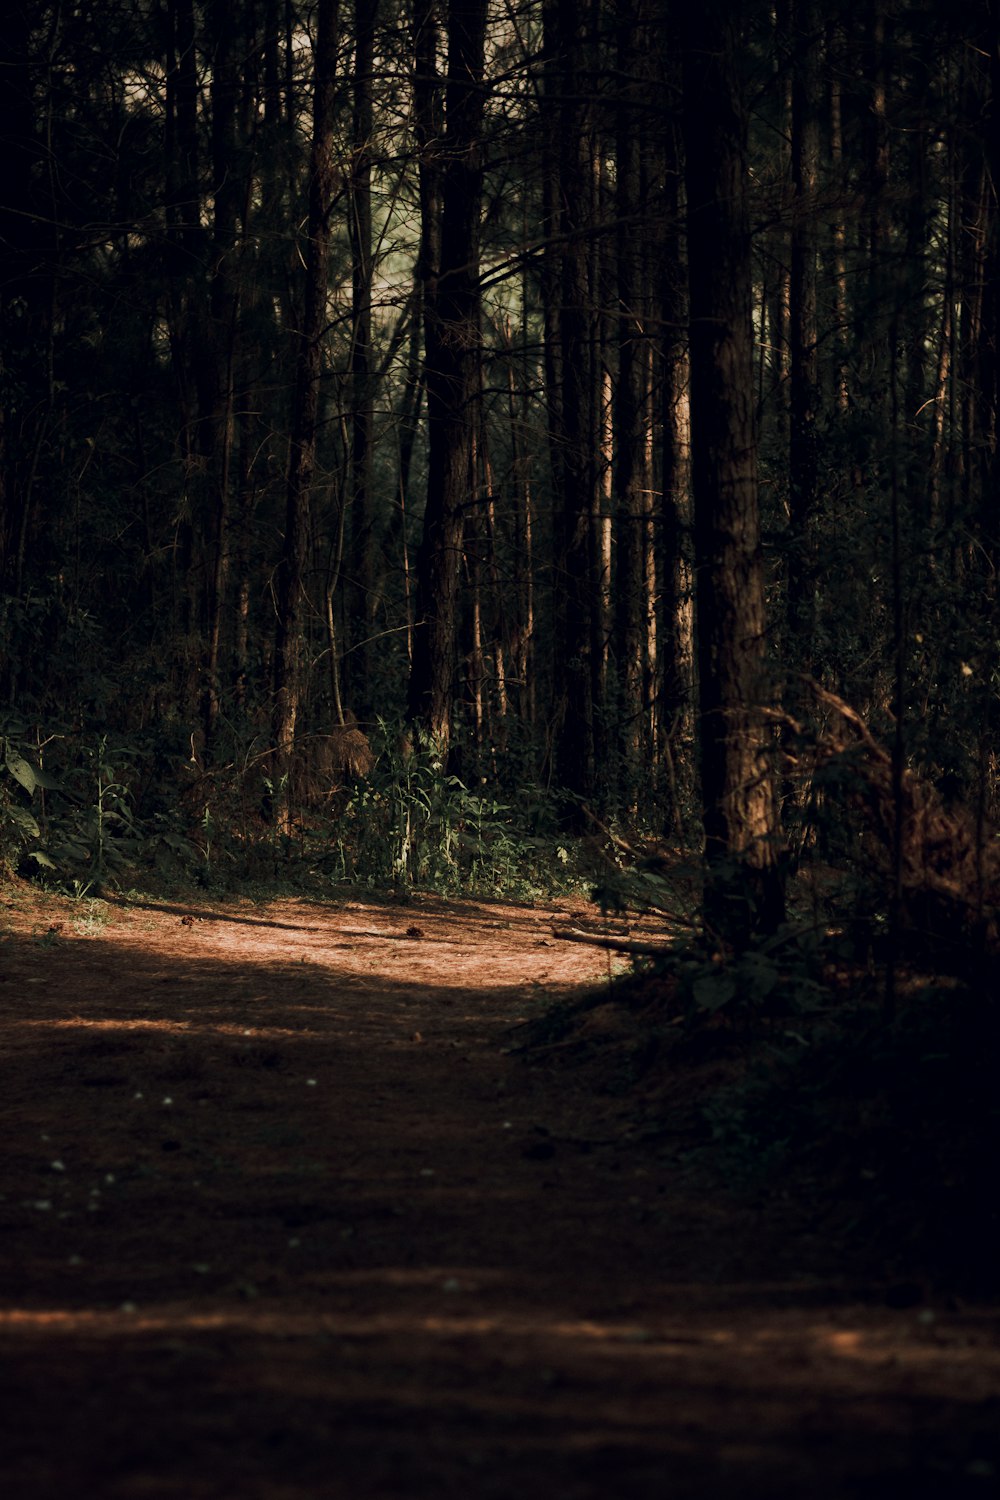 brown dirt road in the woods